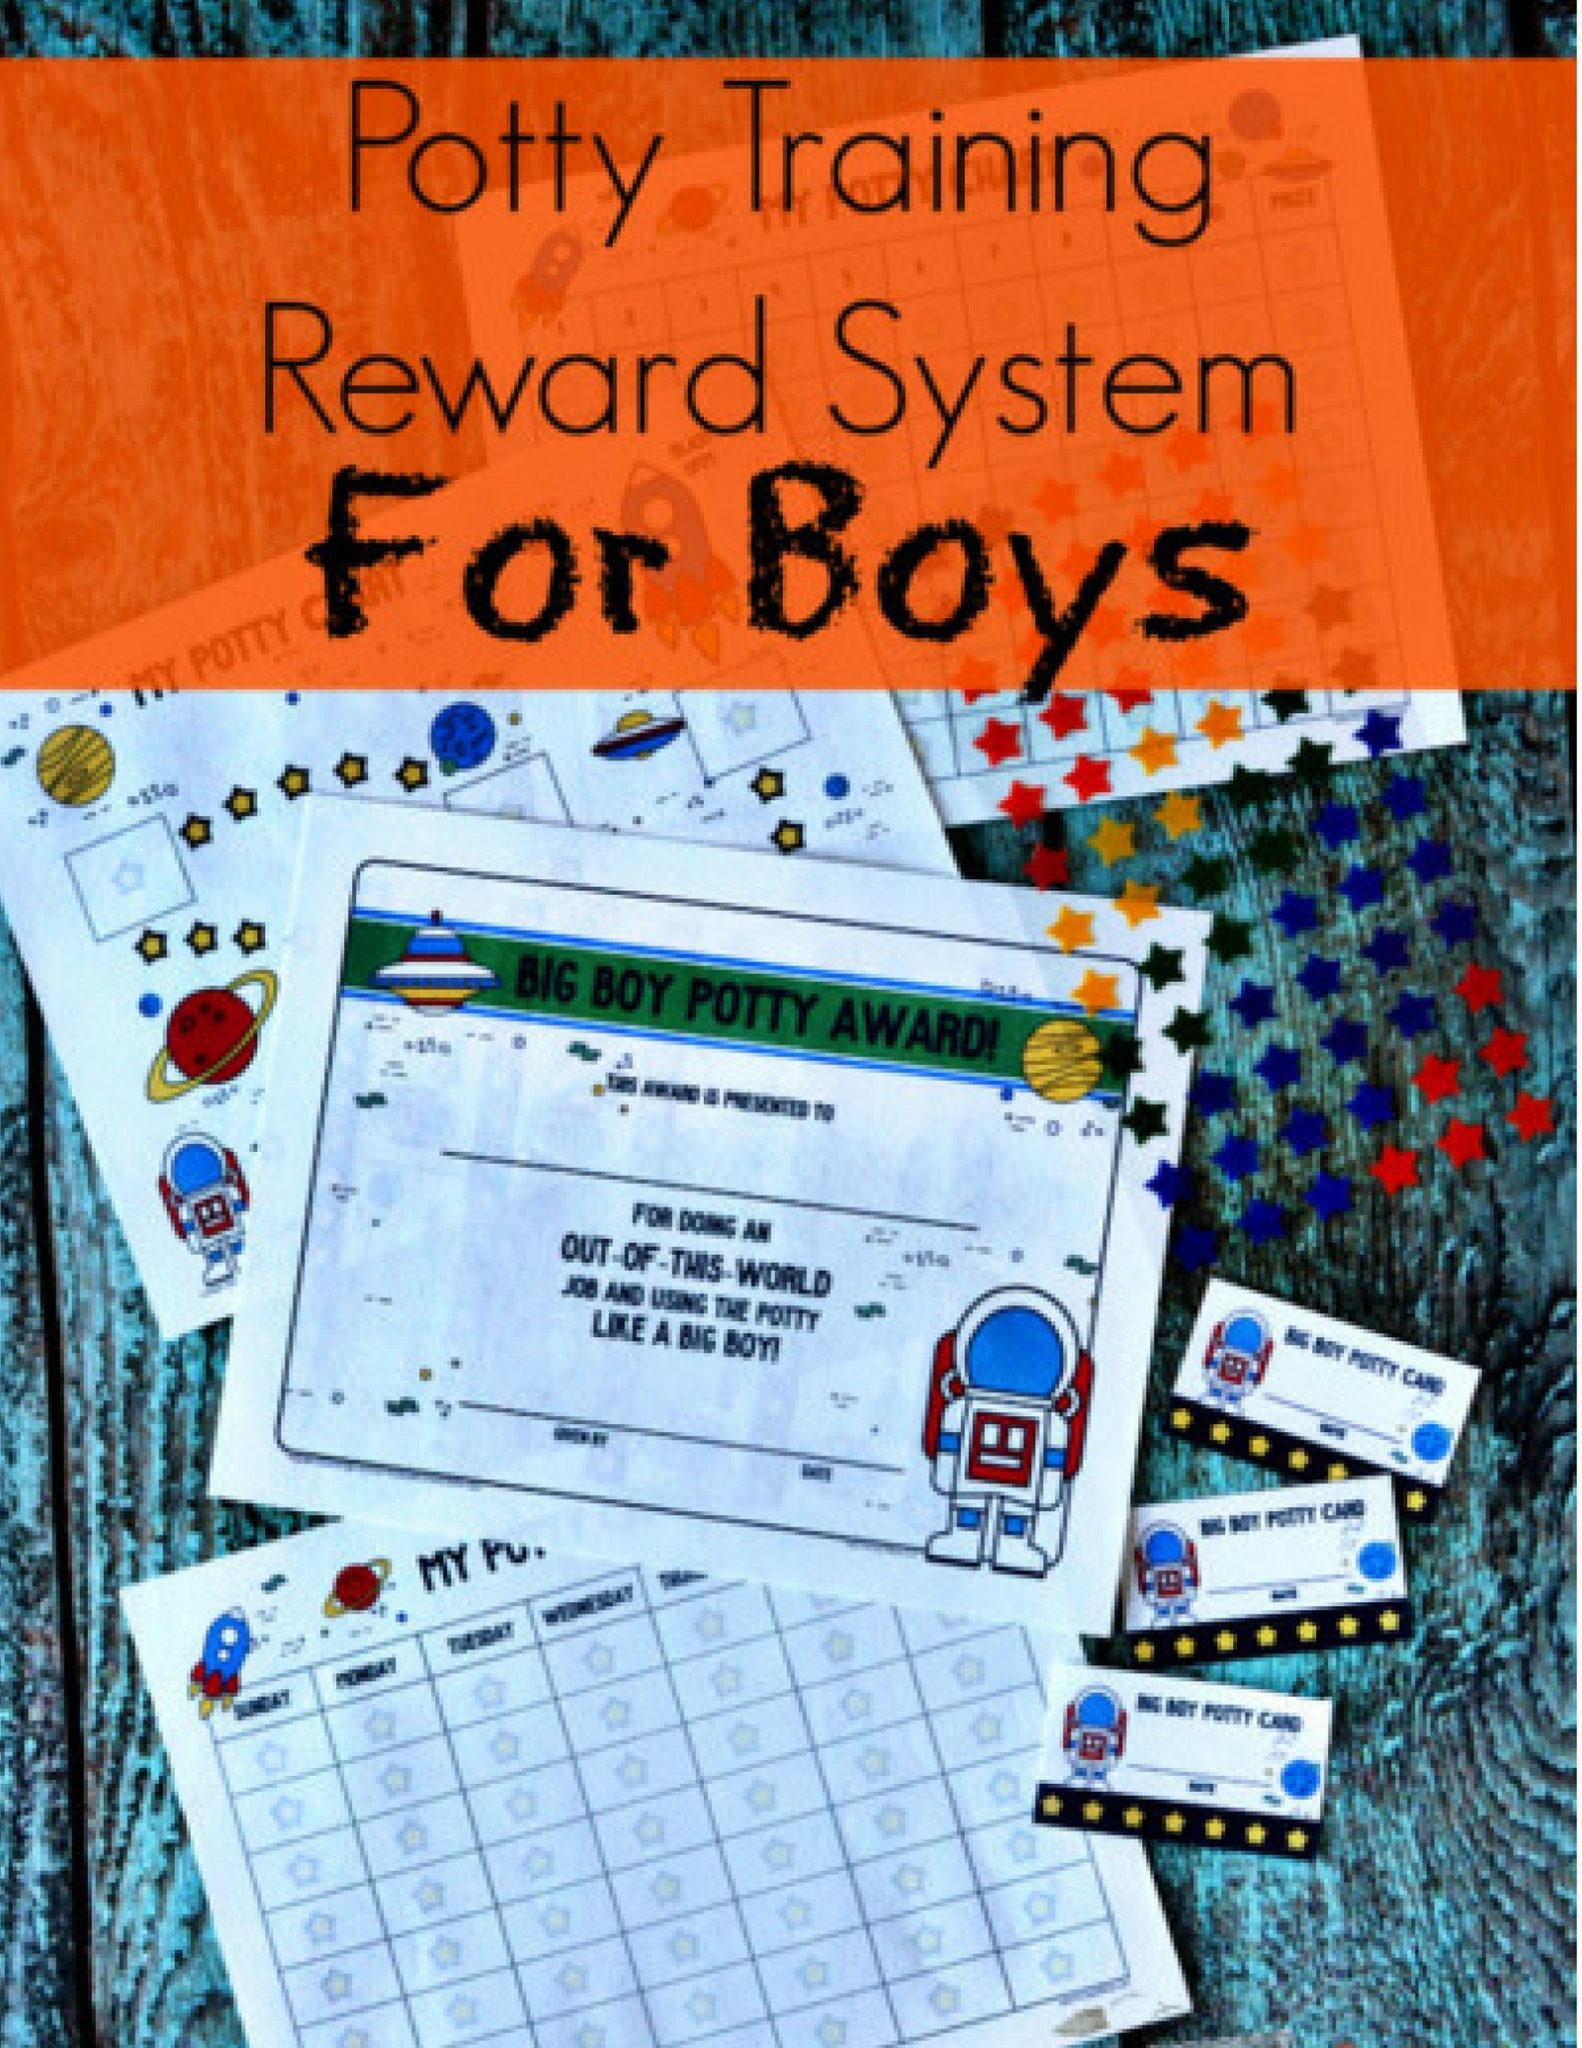 Potty Training Reward System for Boys